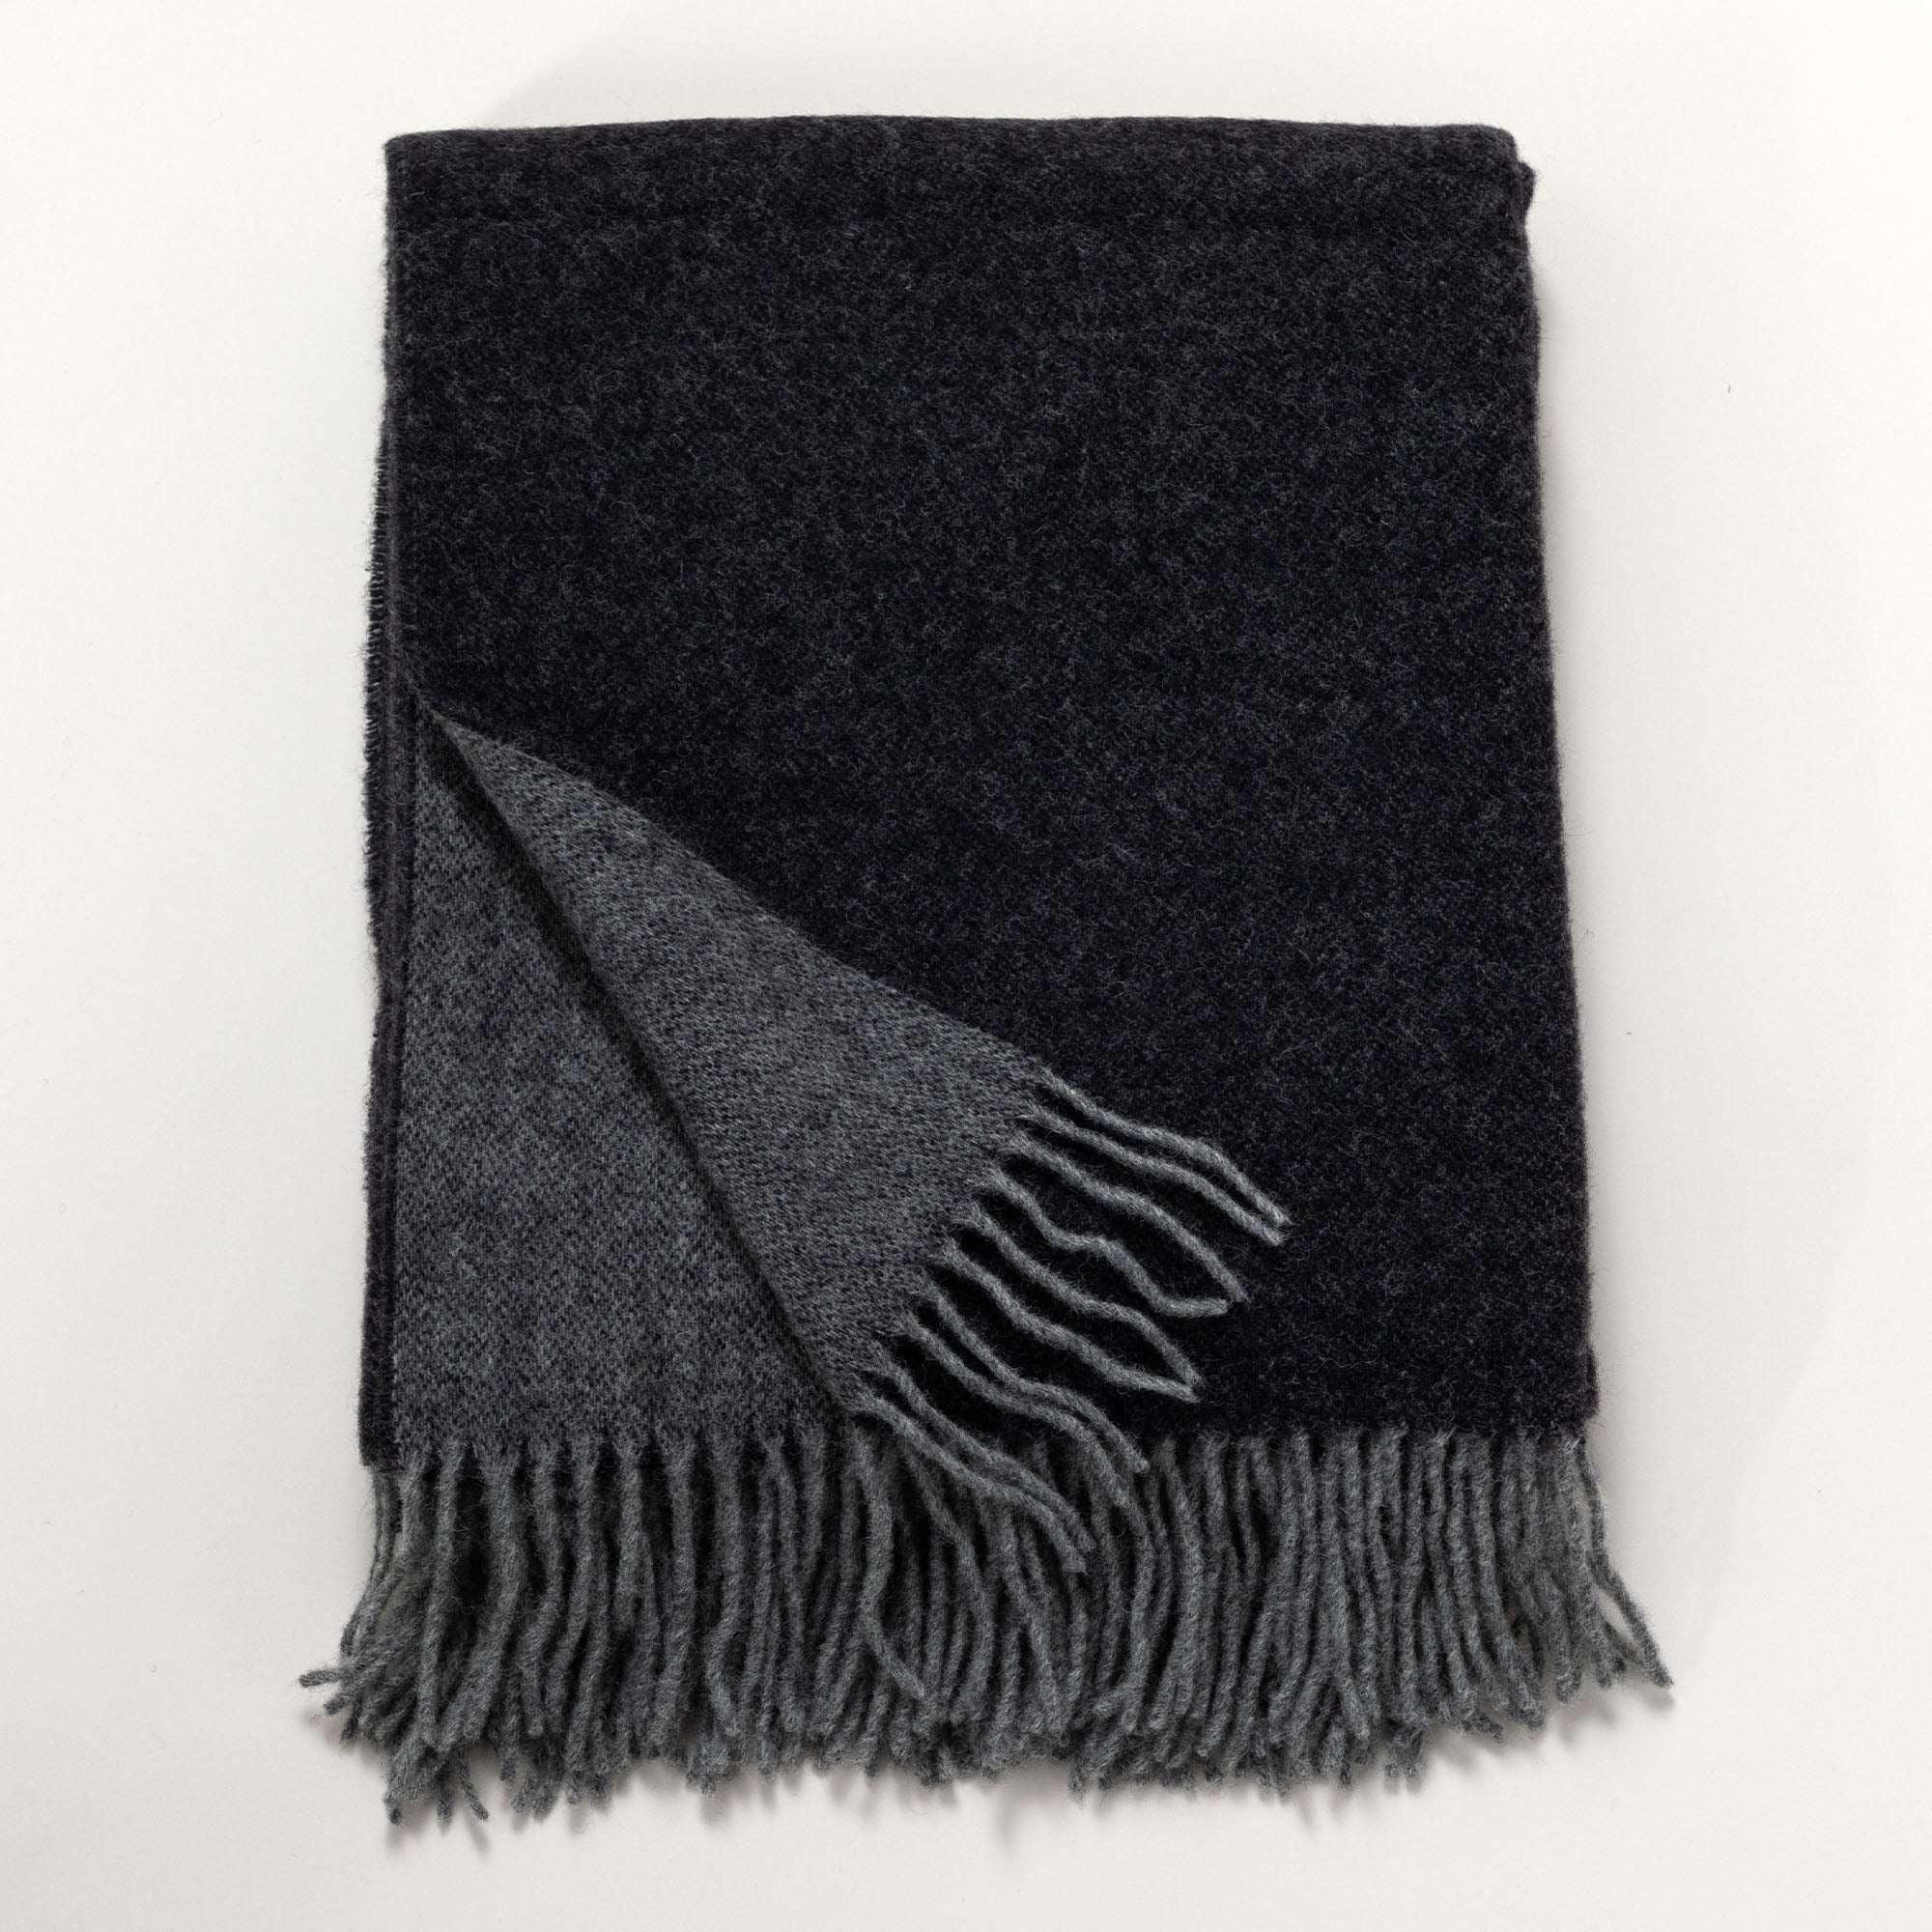 Ukrainian 100% Merino Wool Throw Blanket - Black/Gray